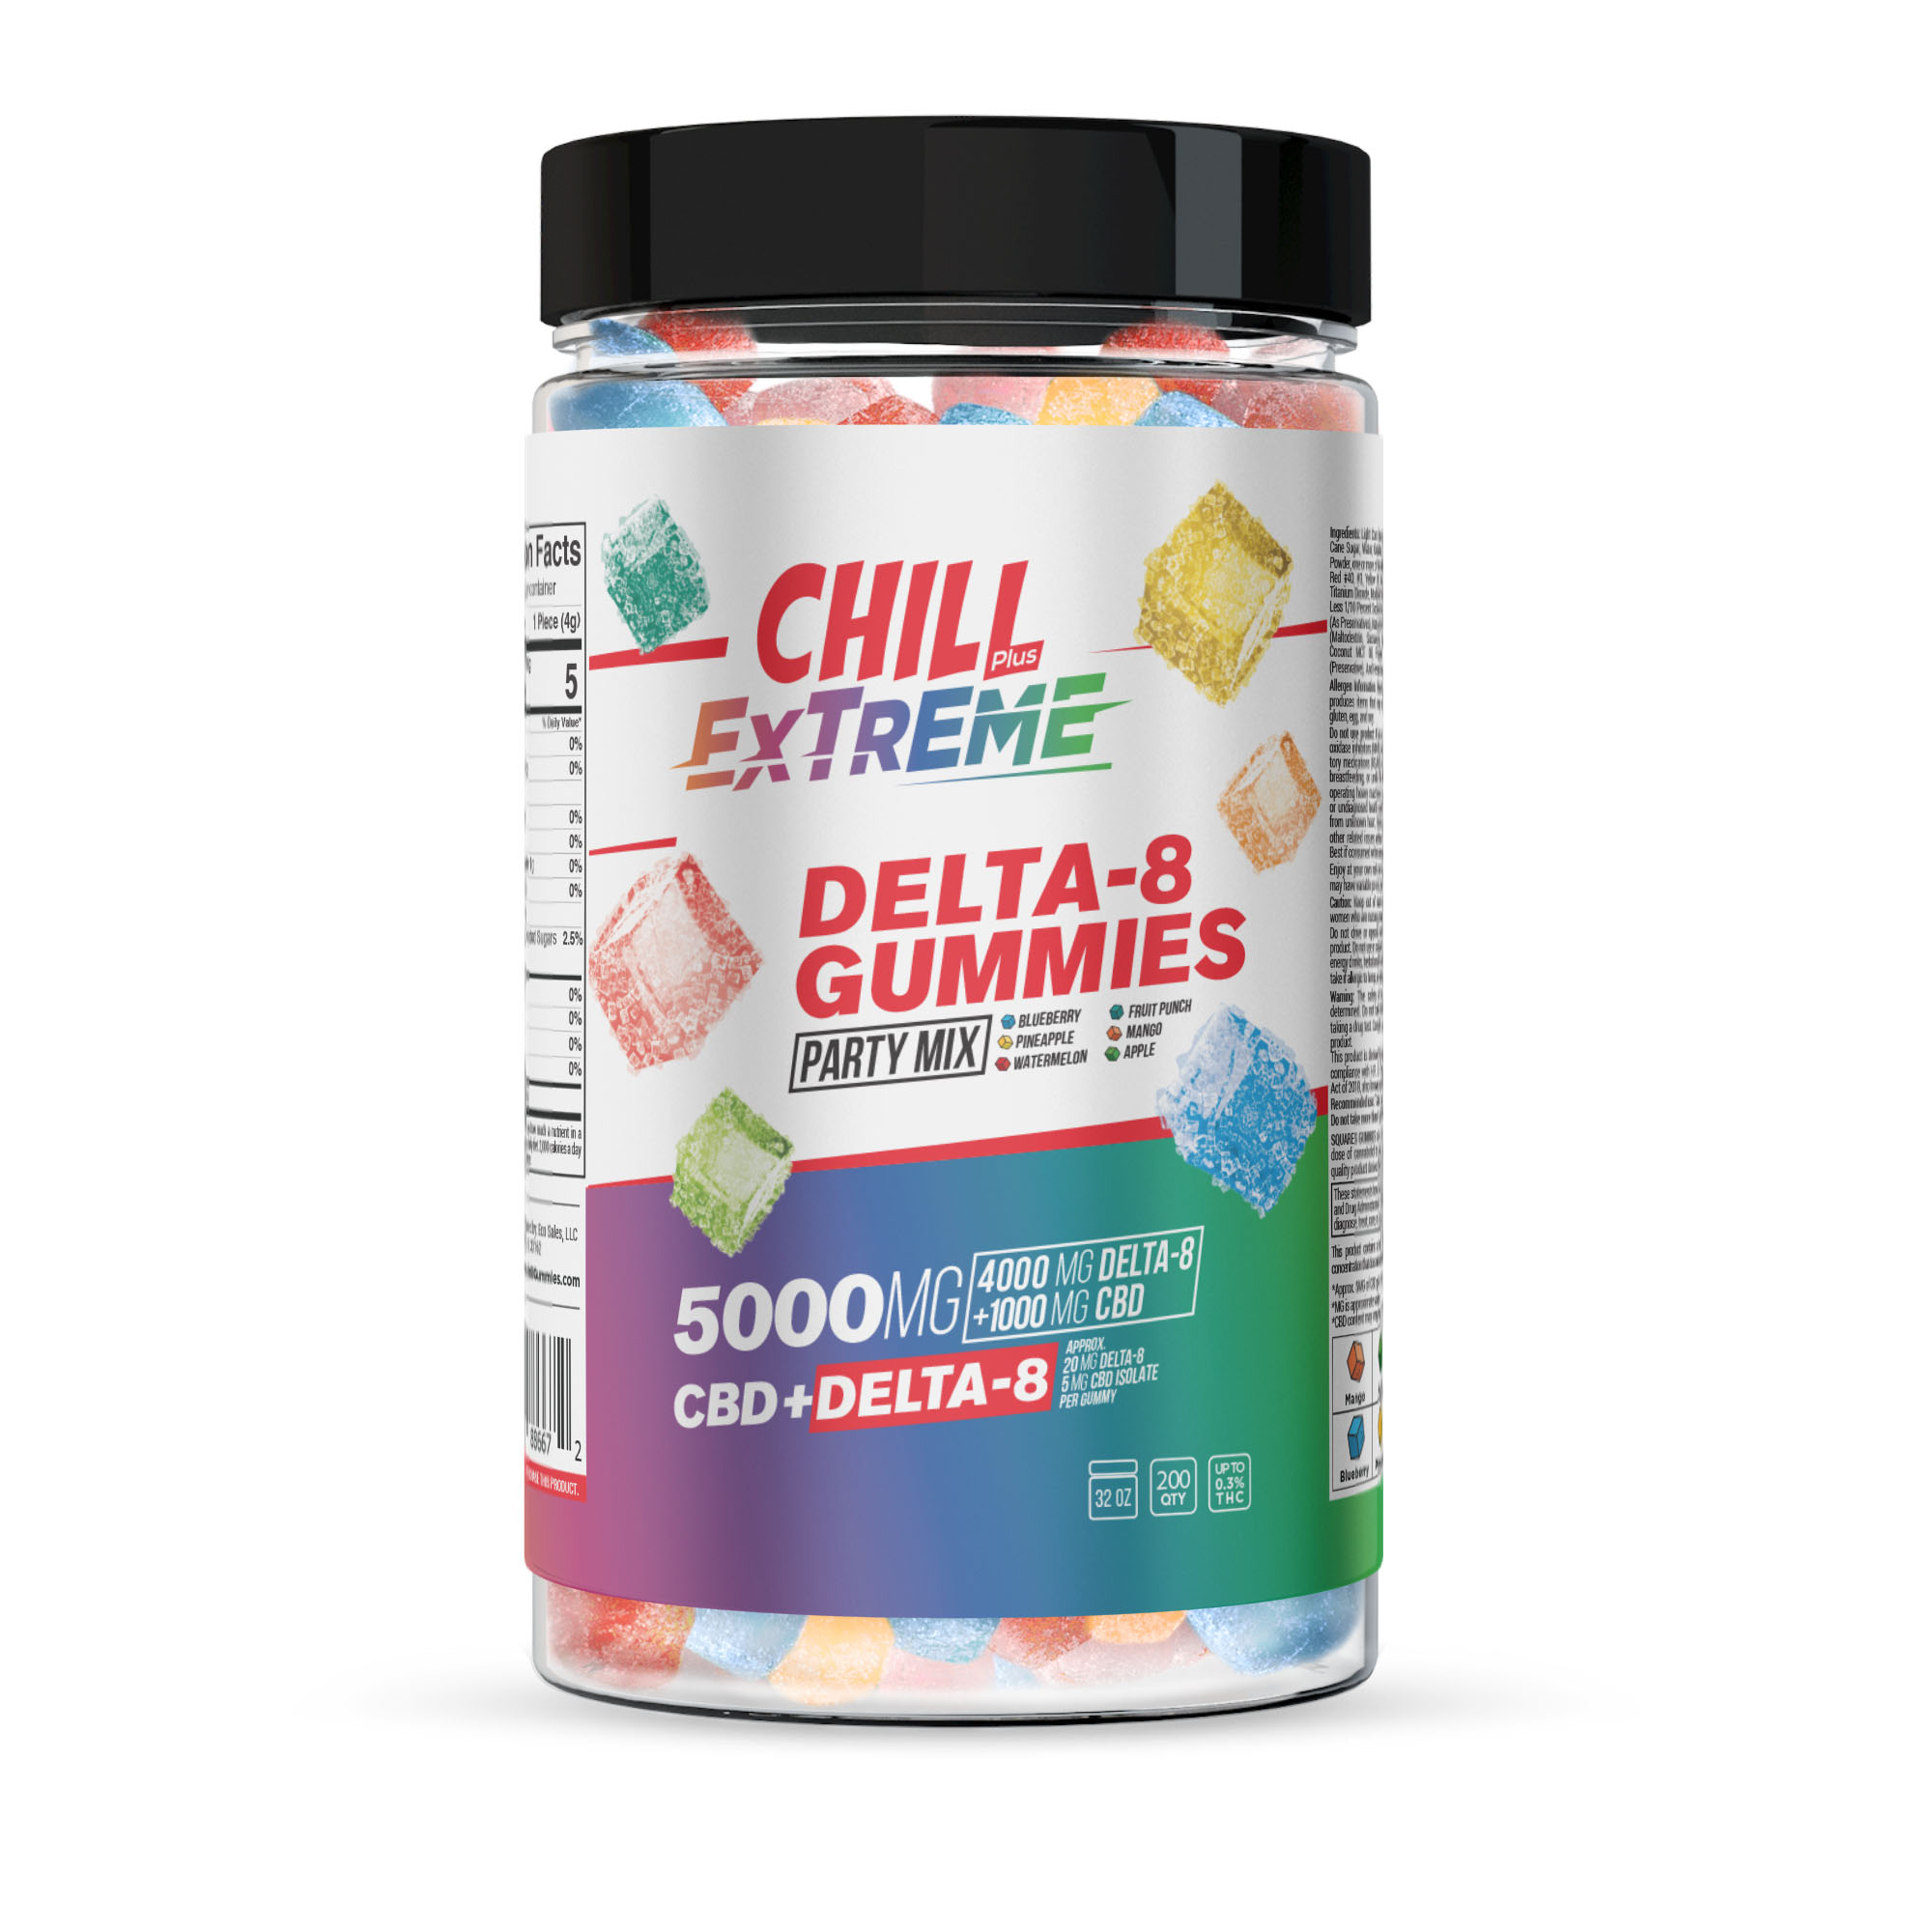 Chill Plus Extreme Delta-8 Gummies Party Mix - 5000X - Diamond CBD